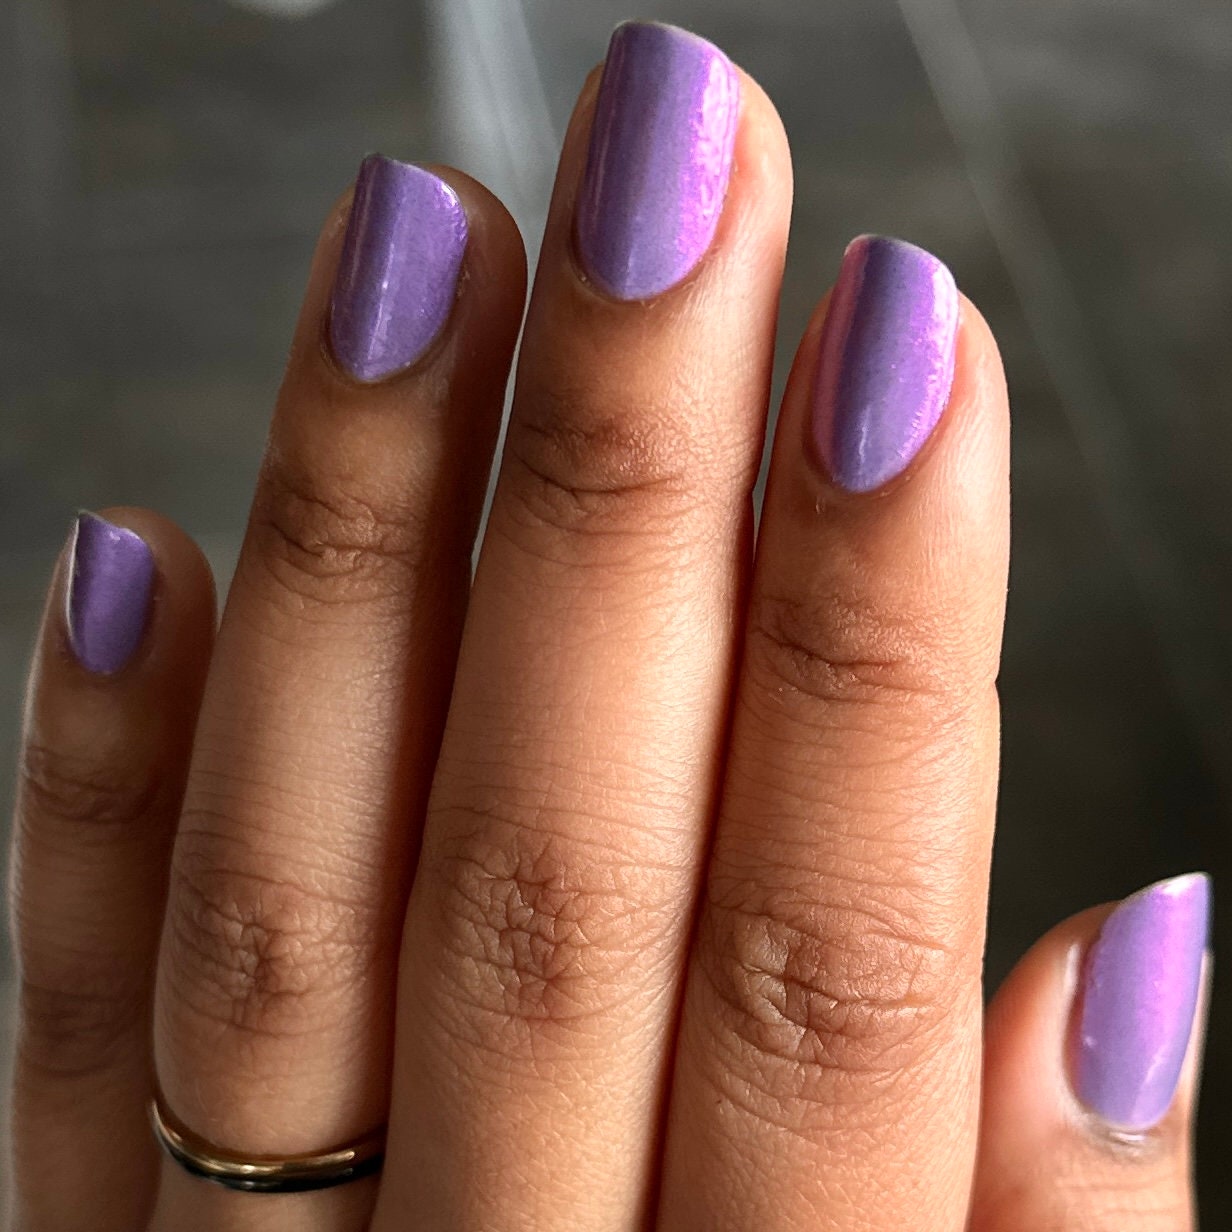 Abstract Lavender Nail Art Design - May contain traces of polish